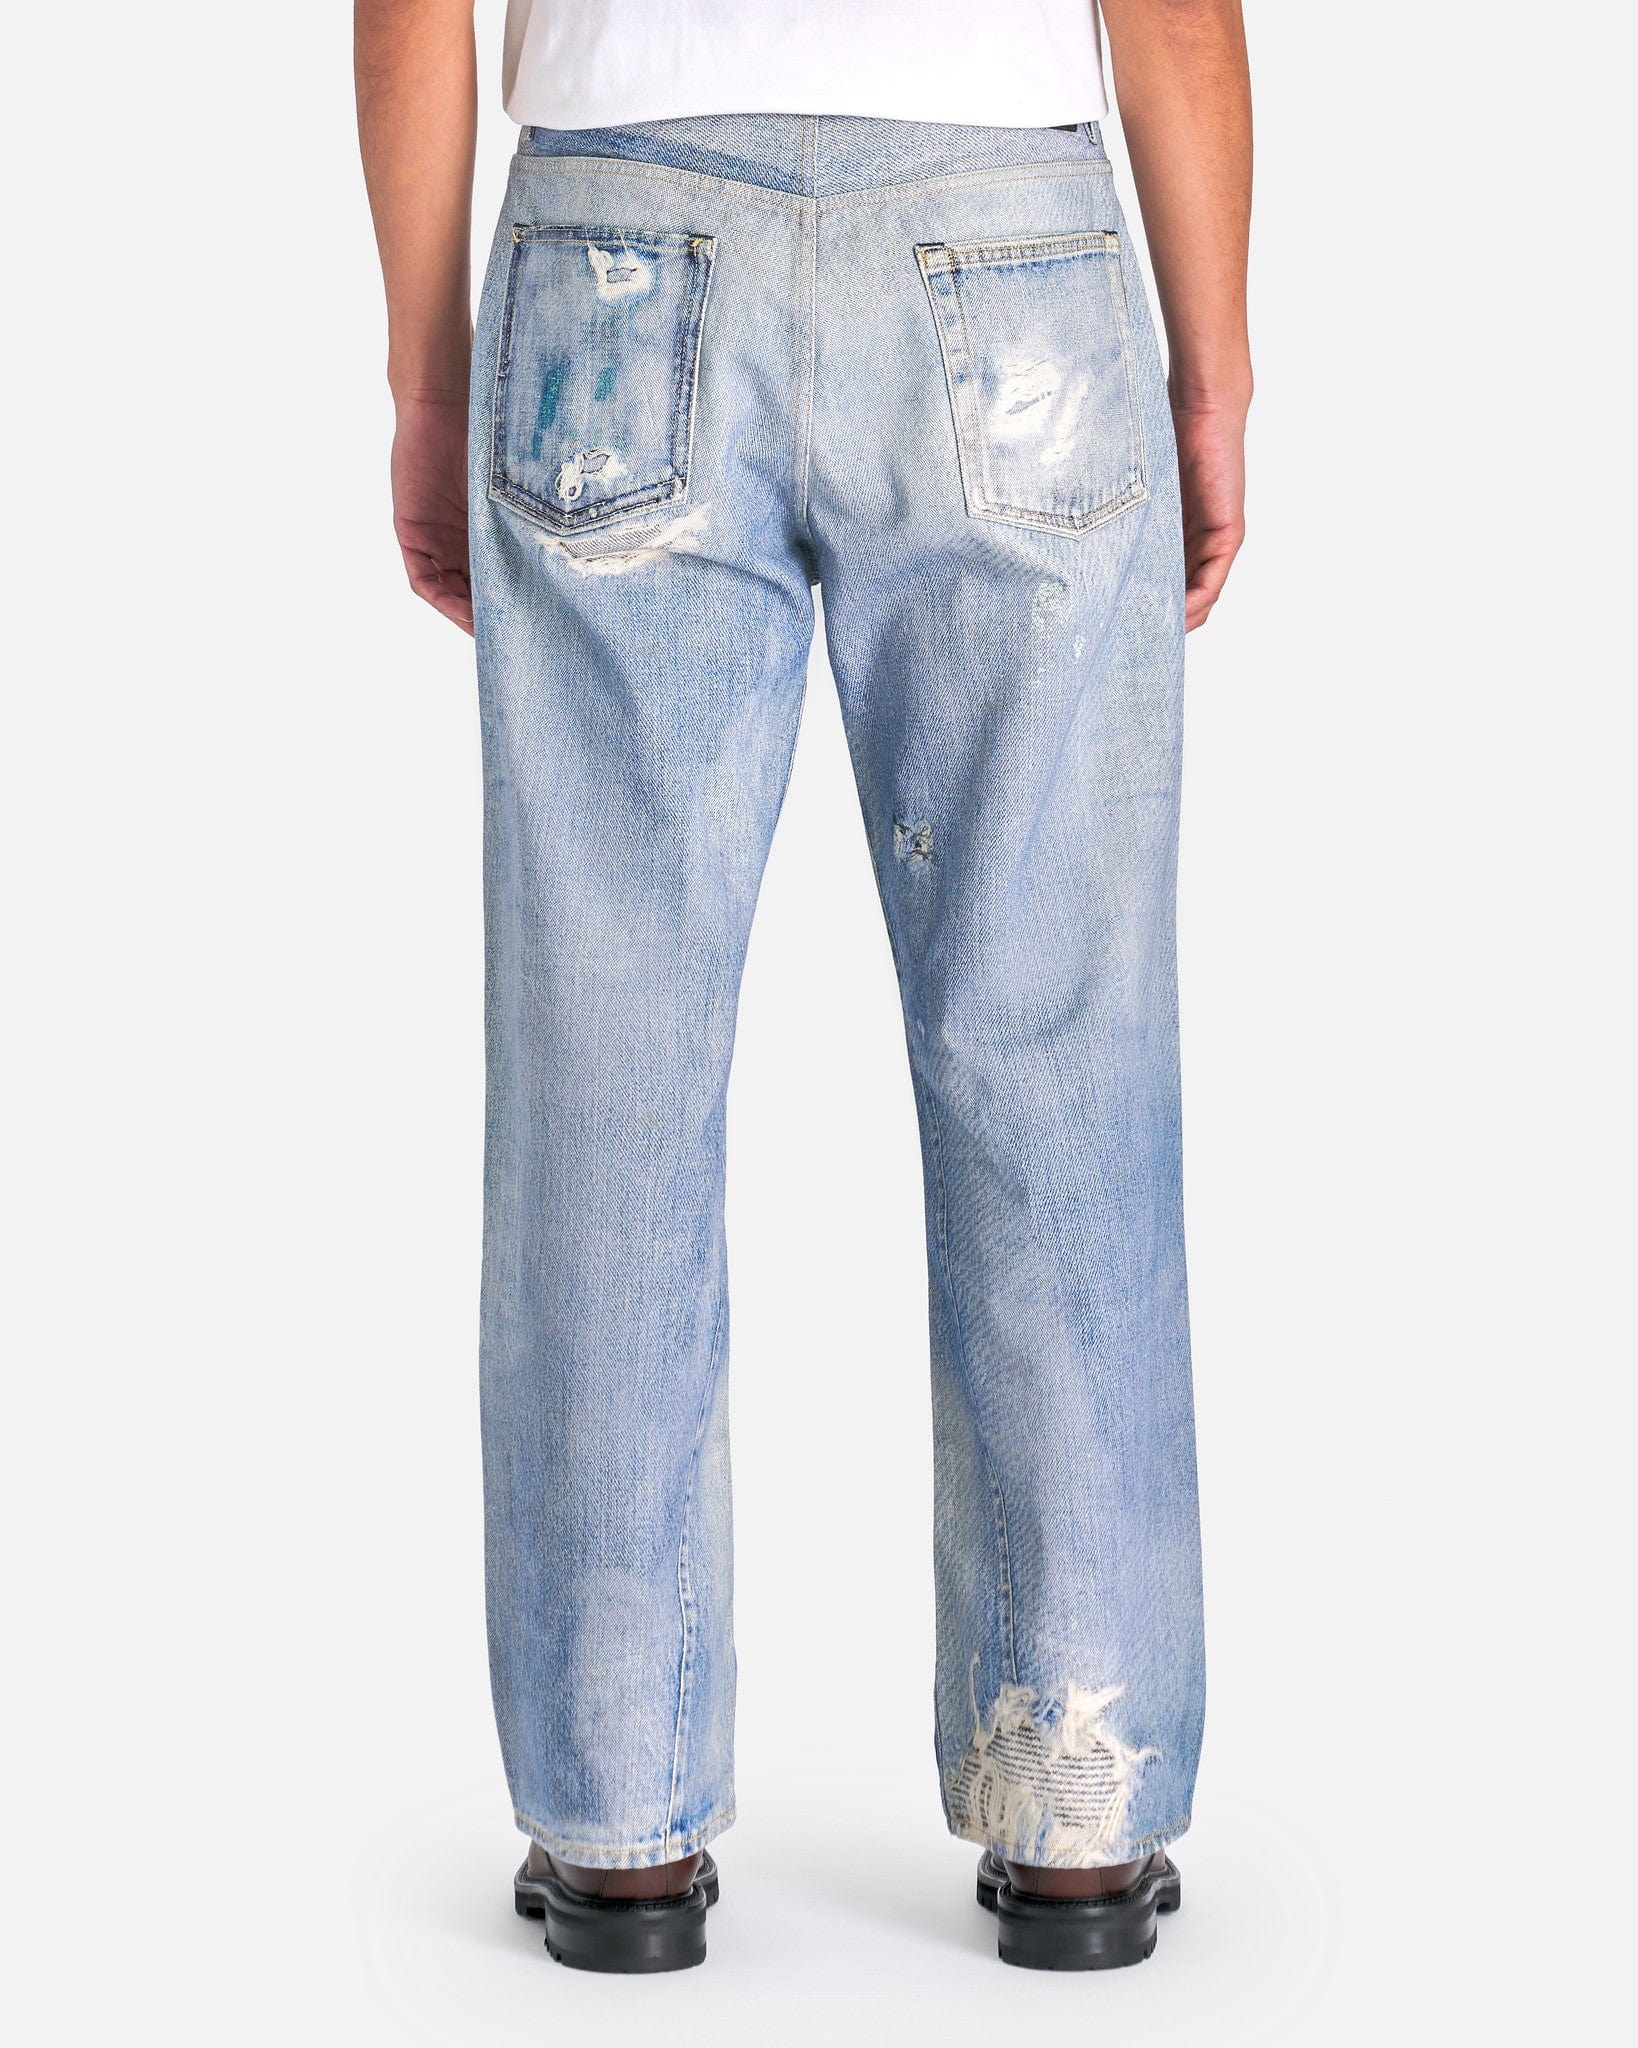 Third Cut Jeans in Digital Denim Print